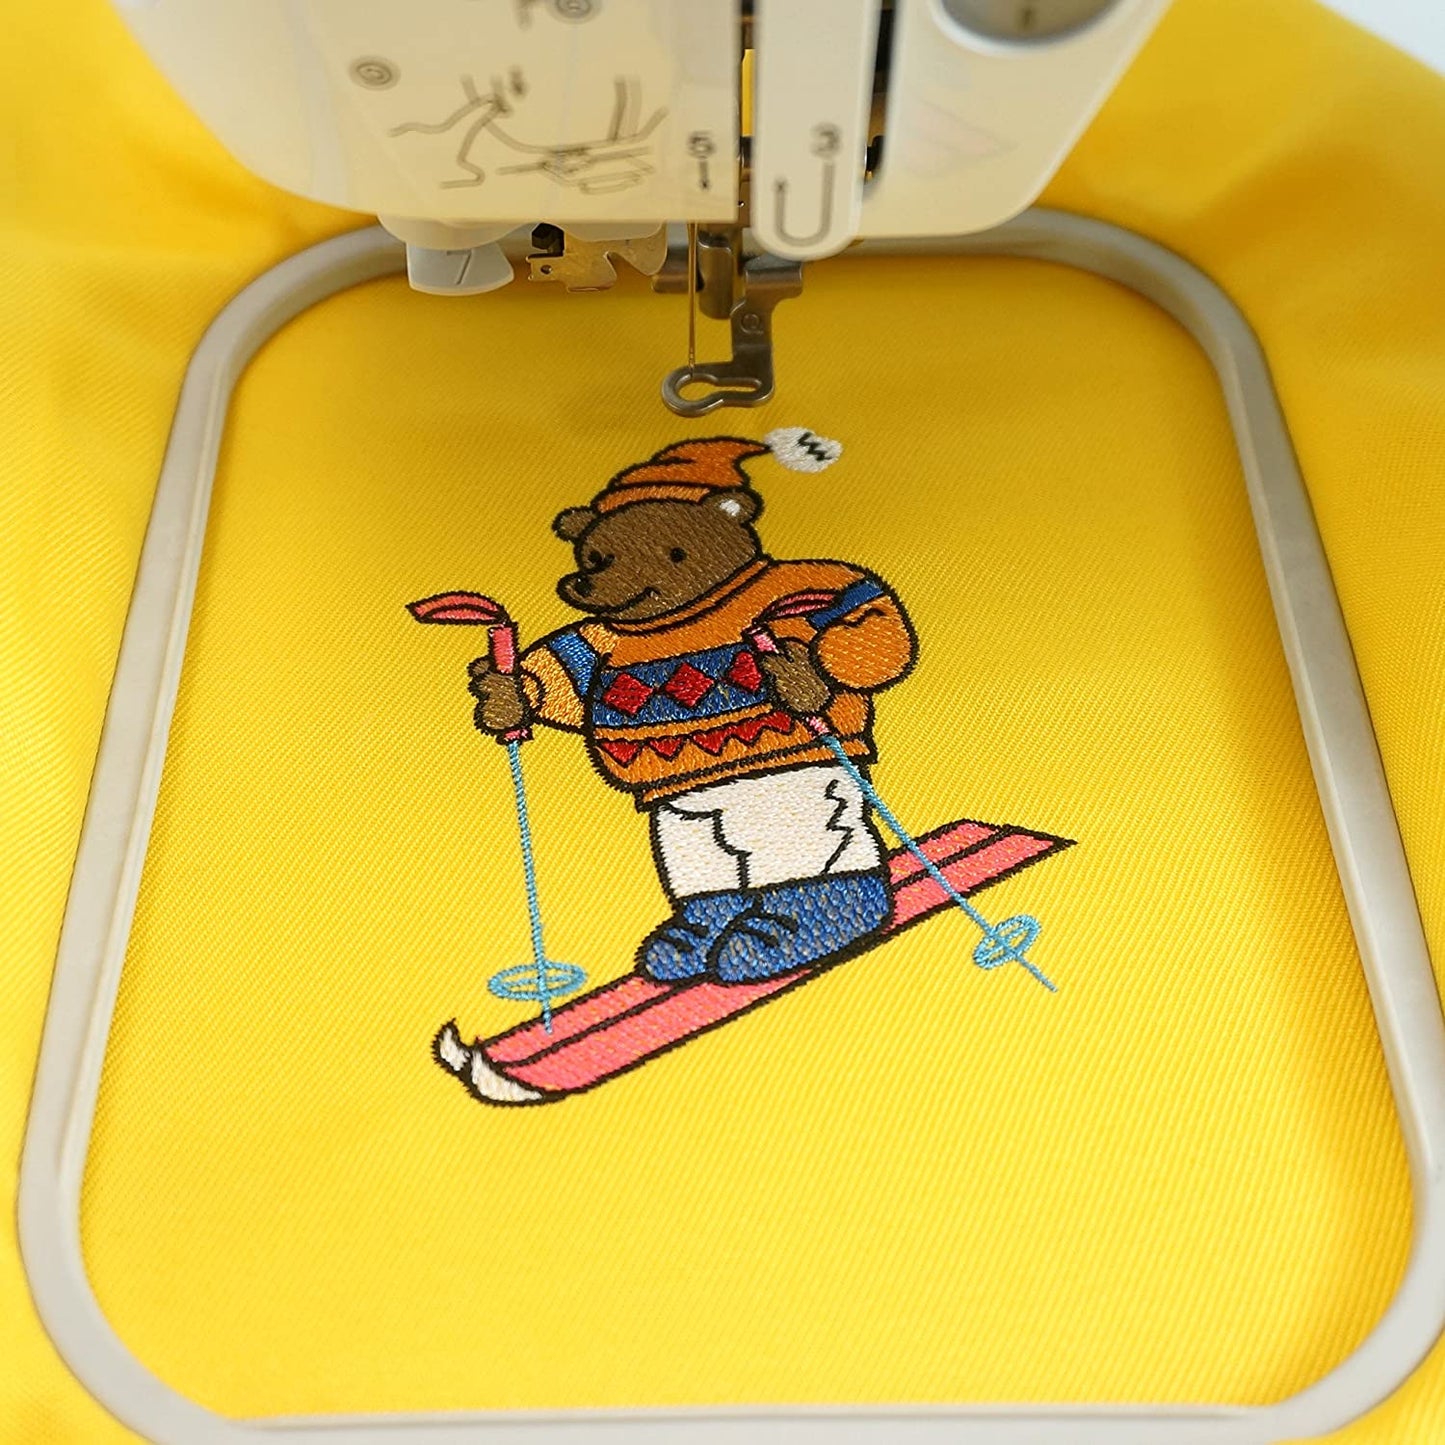 New brothread Cut Away Machine Embroidery Stabilizer Backing 20" x 25 Yd roll - Medium Weight 2.5 Ounce